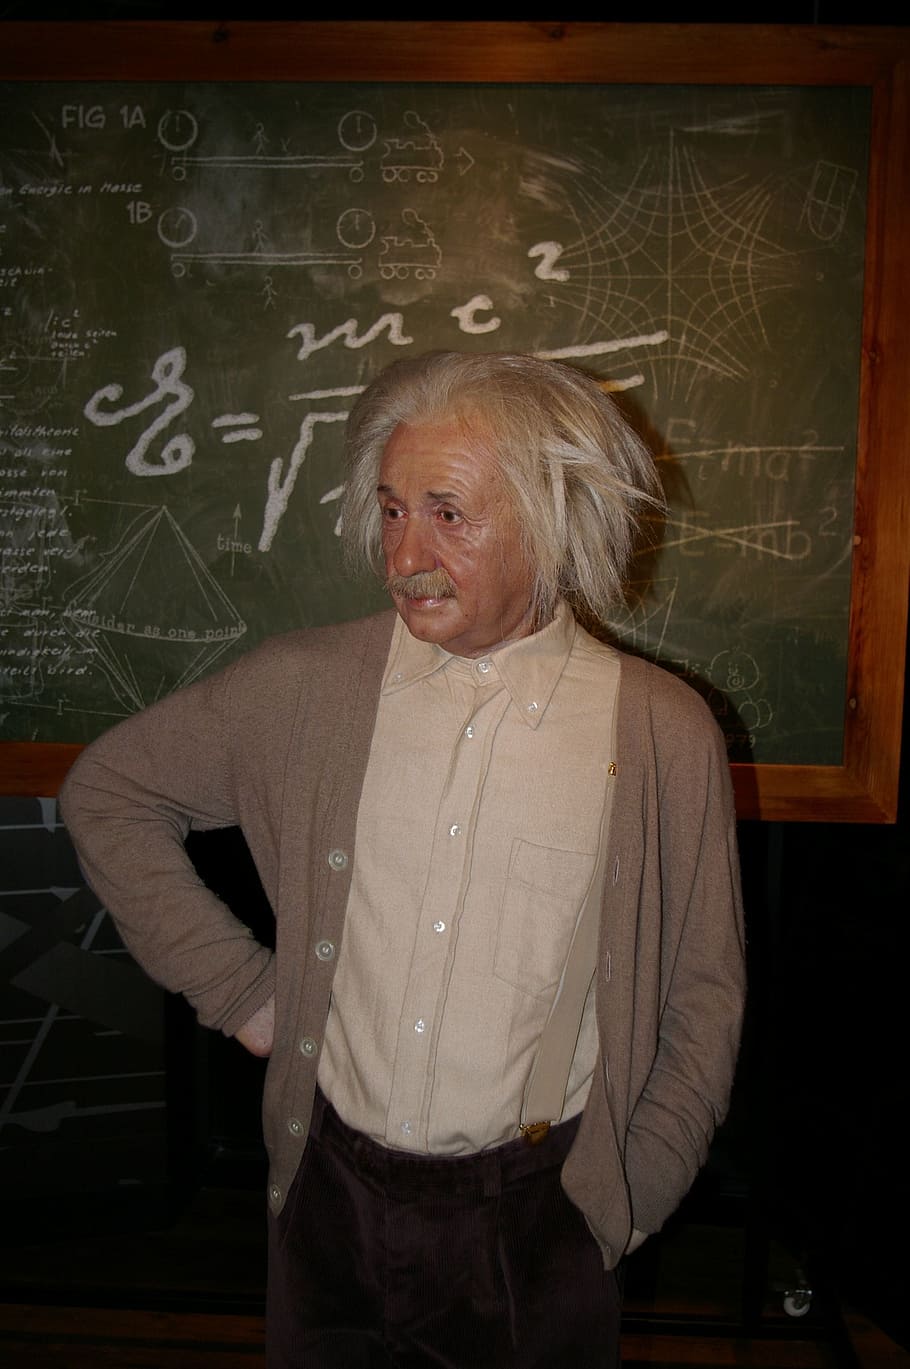 HD wallpaper: Albert Einstein costume, Wax Figure, Berlin, blackboard,  classroom | Wallpaper Flare